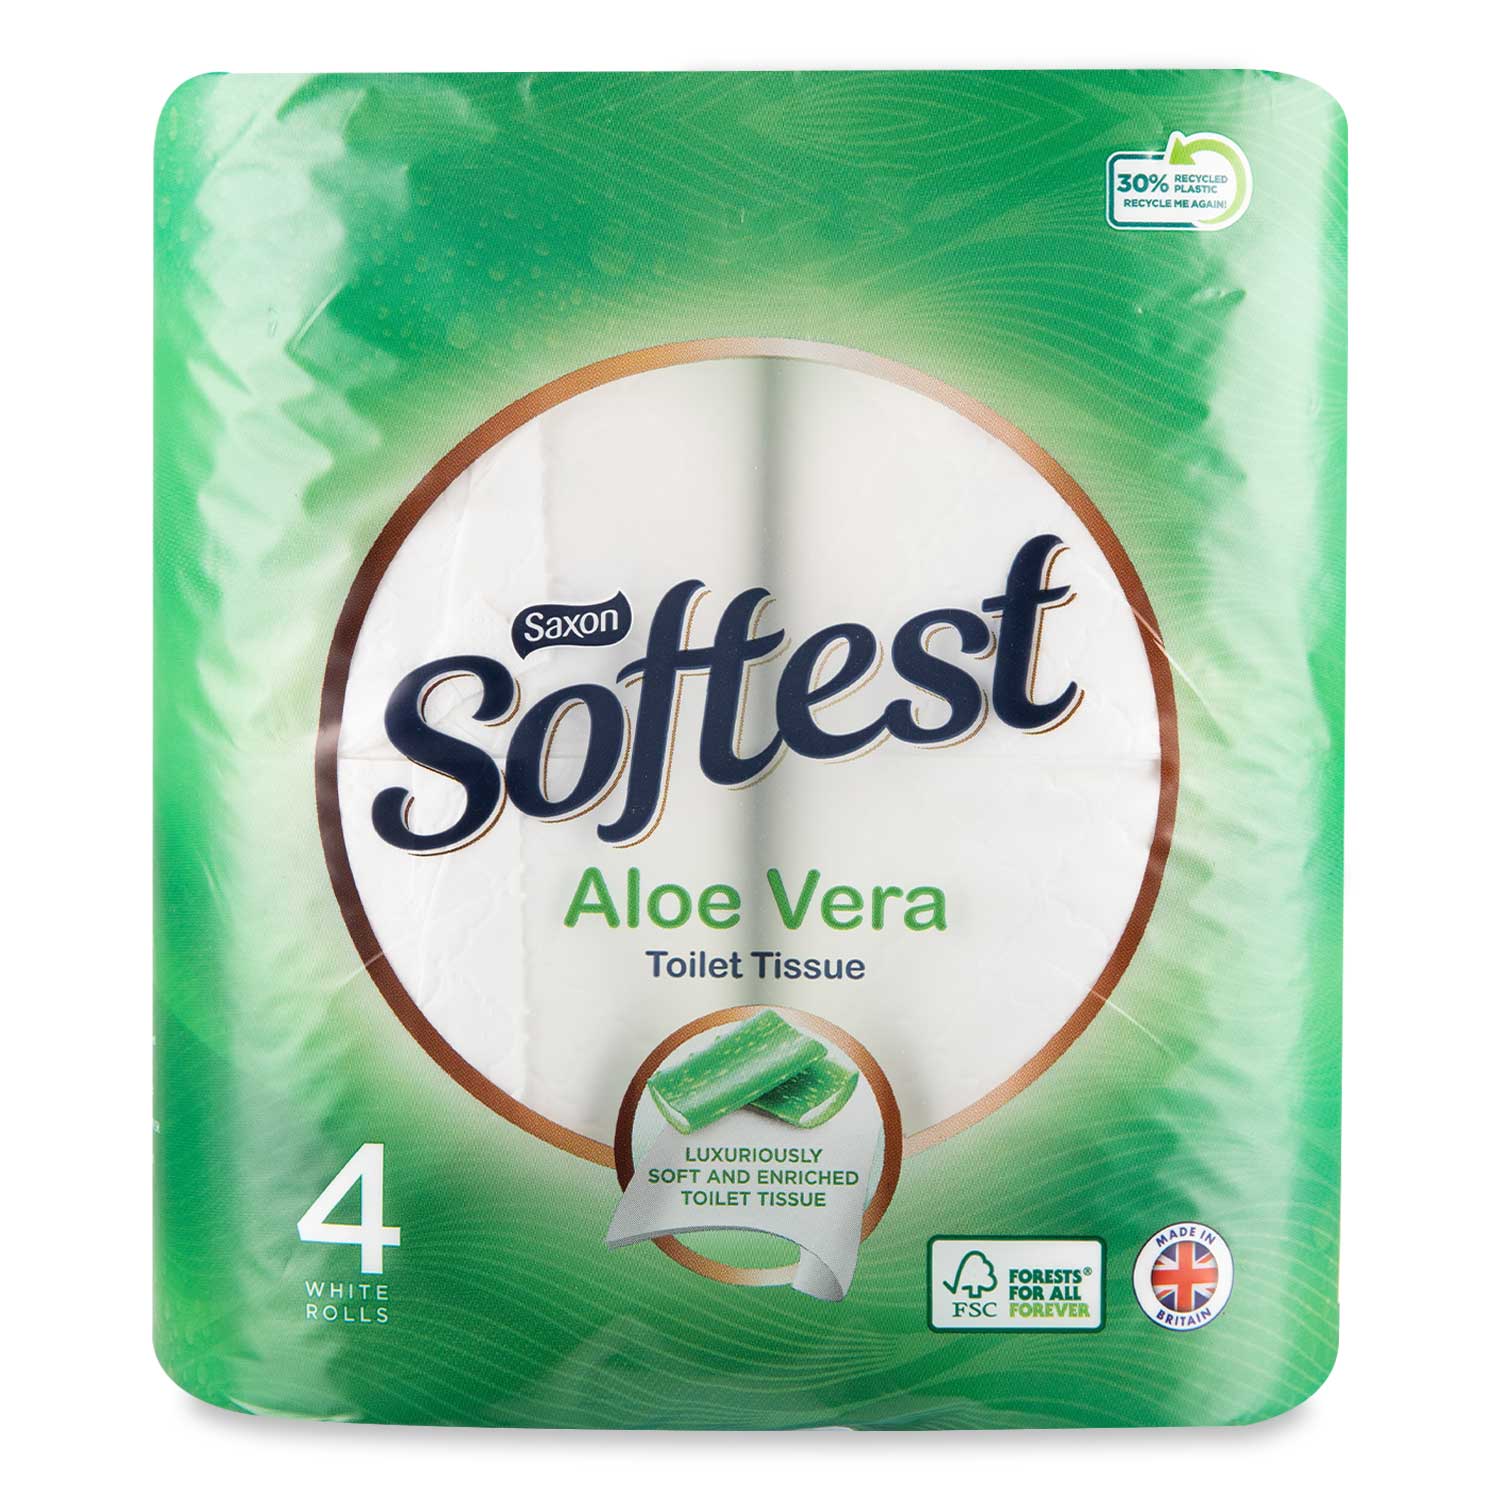 Saxon Aloe Vera 3 Ply Toilet Tissue 4 Pack